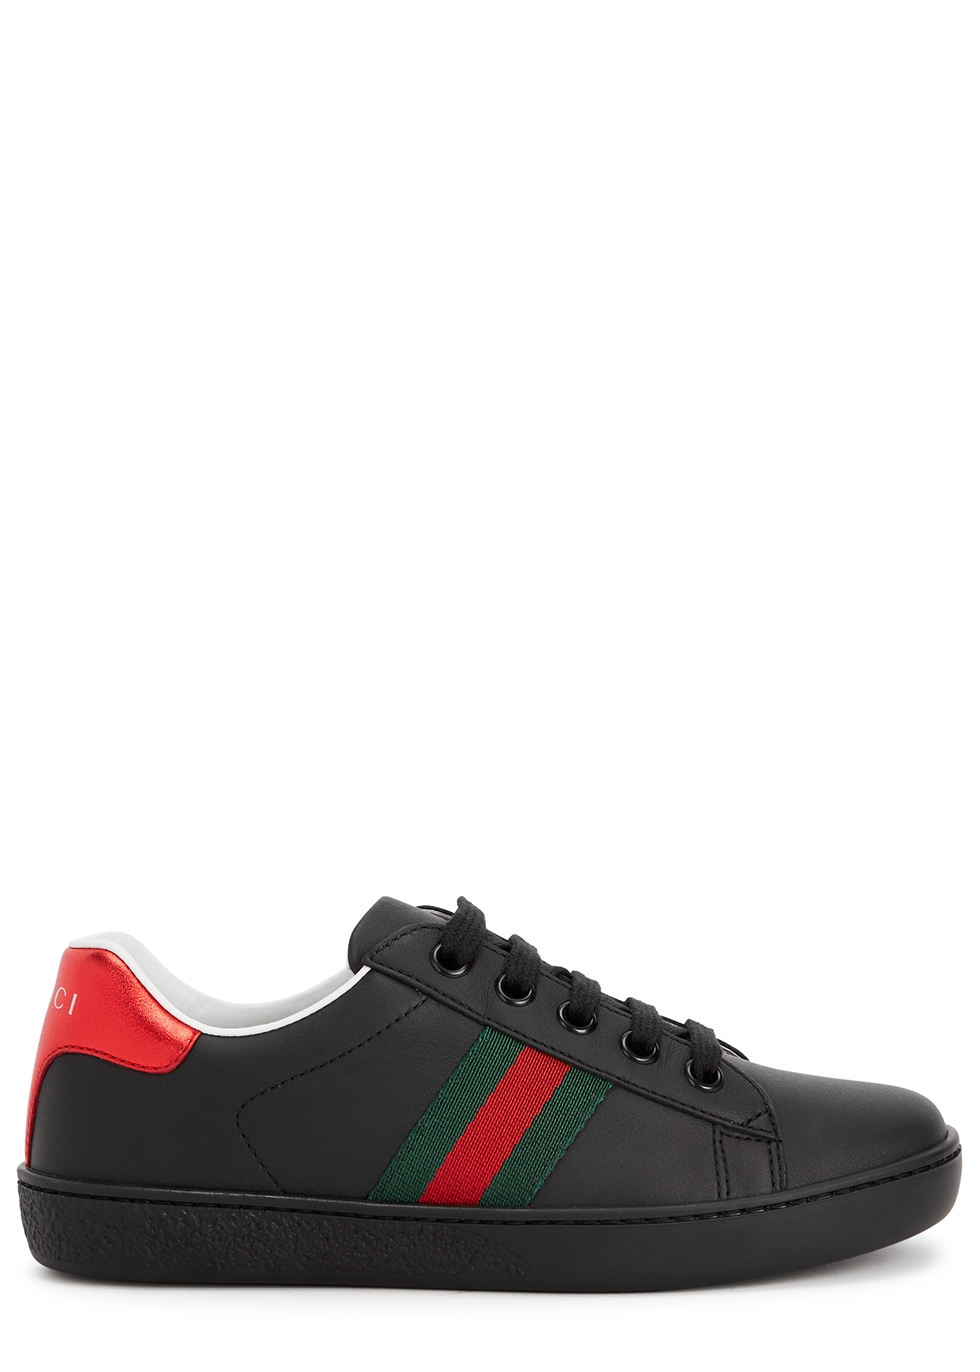 Gucci KIDS Ace black leather sneakers - Harvey Nichols